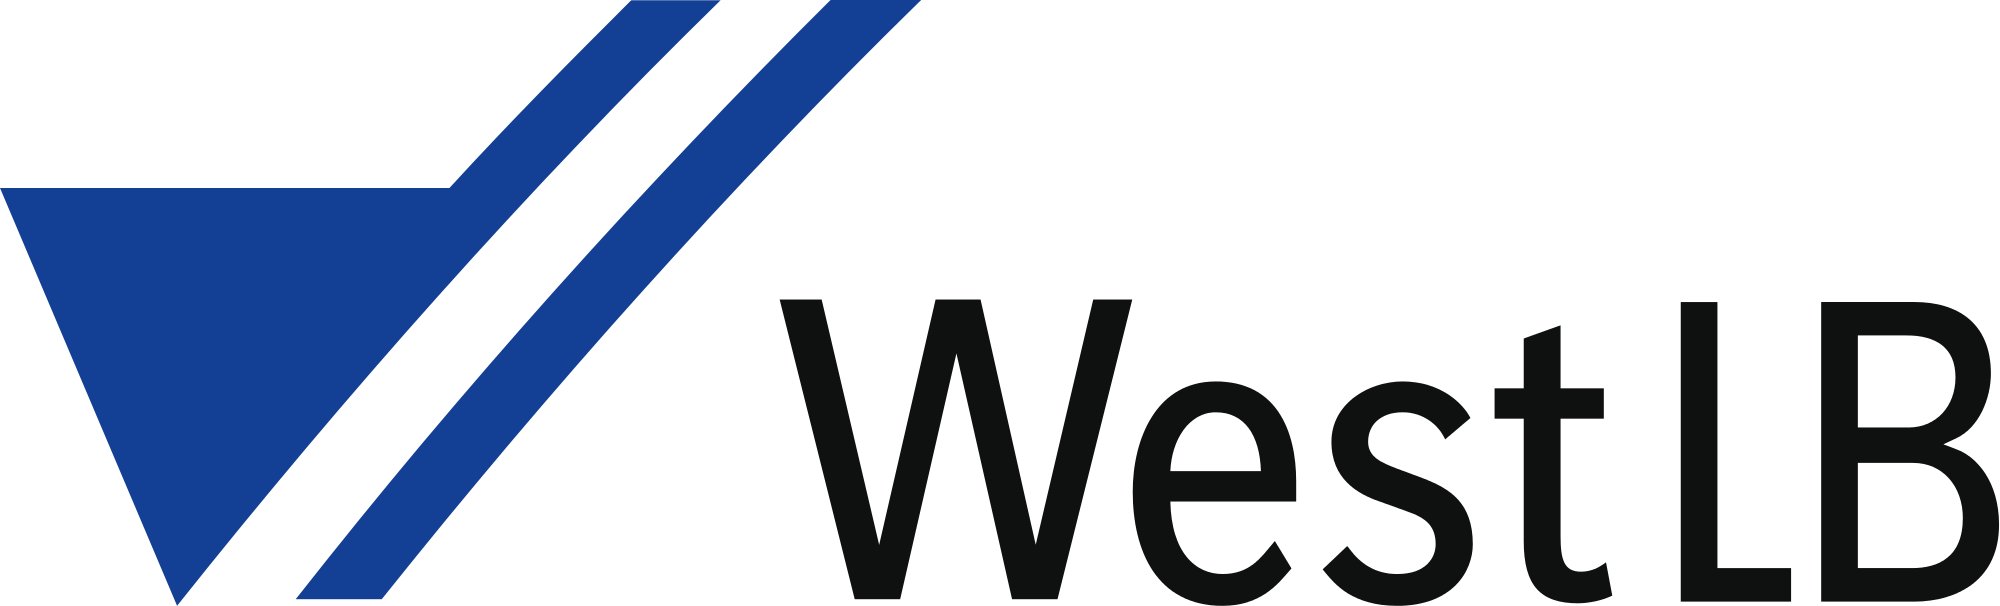 WestLB Brand Logo